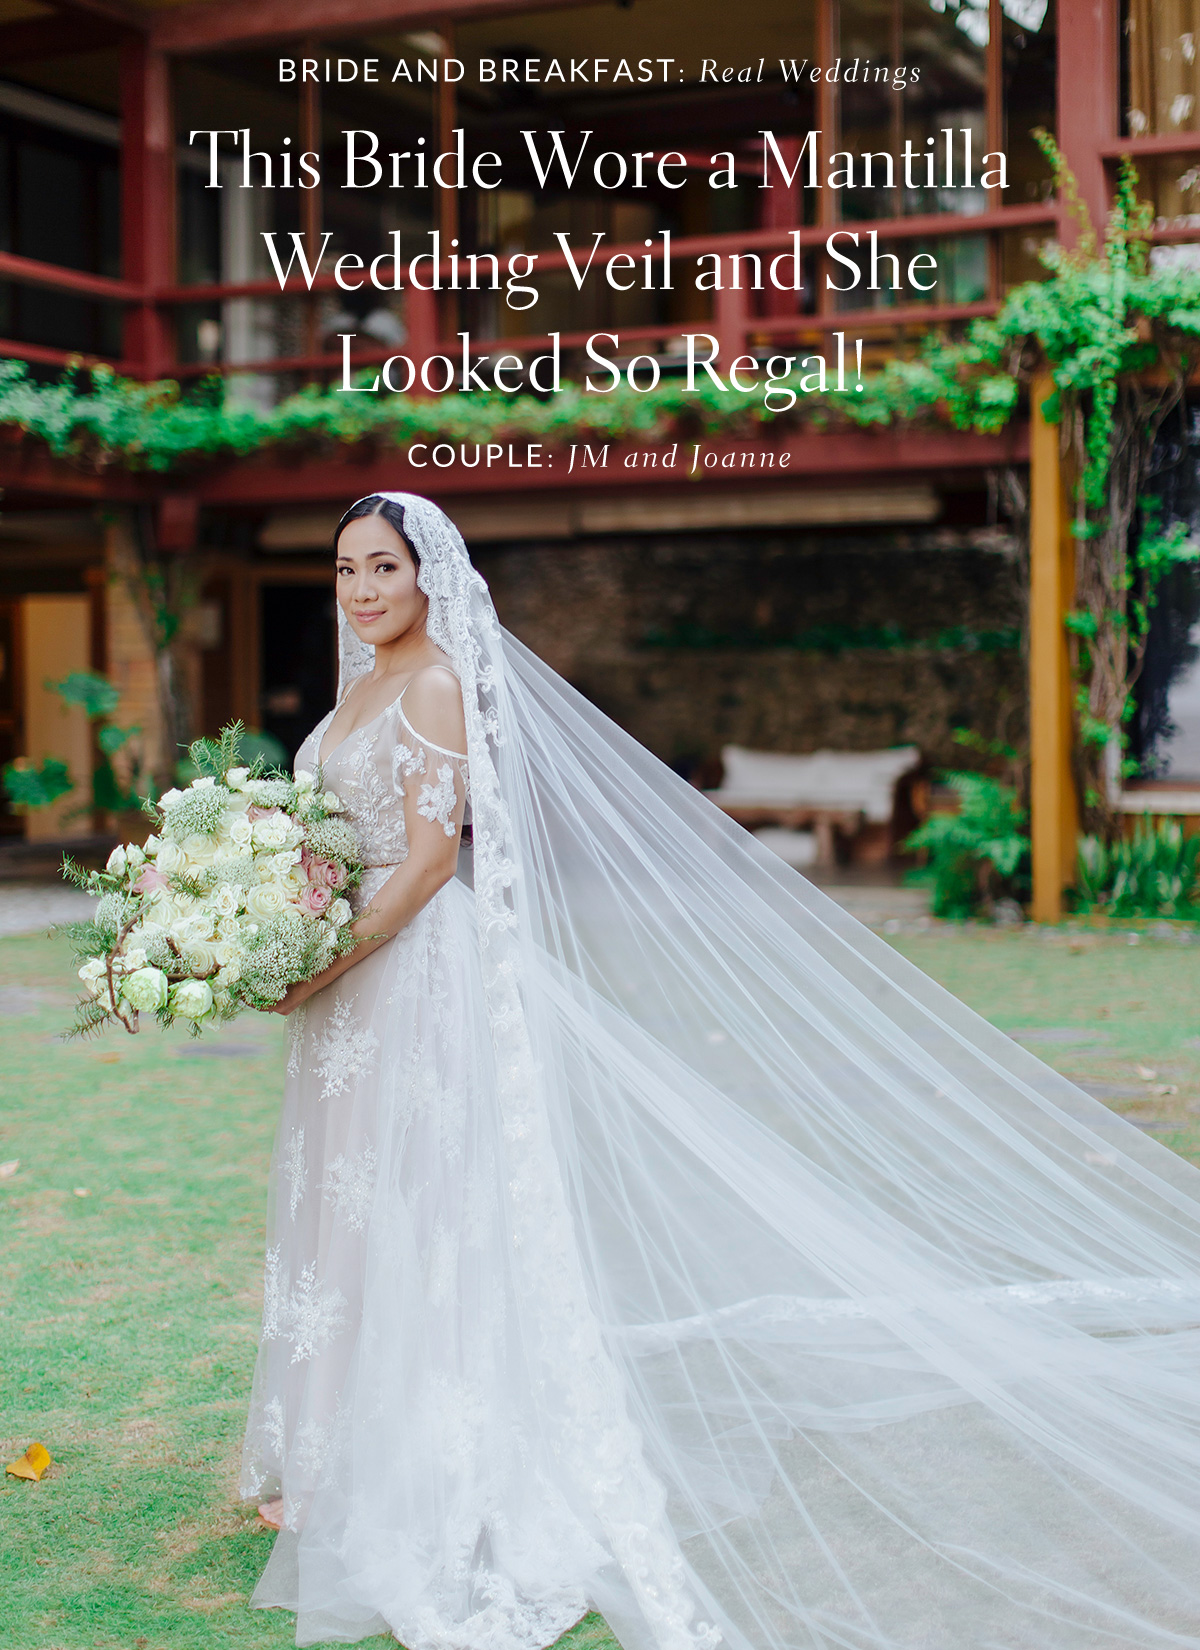 This Bride Chose a Mantilla Wedding Veil and She Looked So Regal!